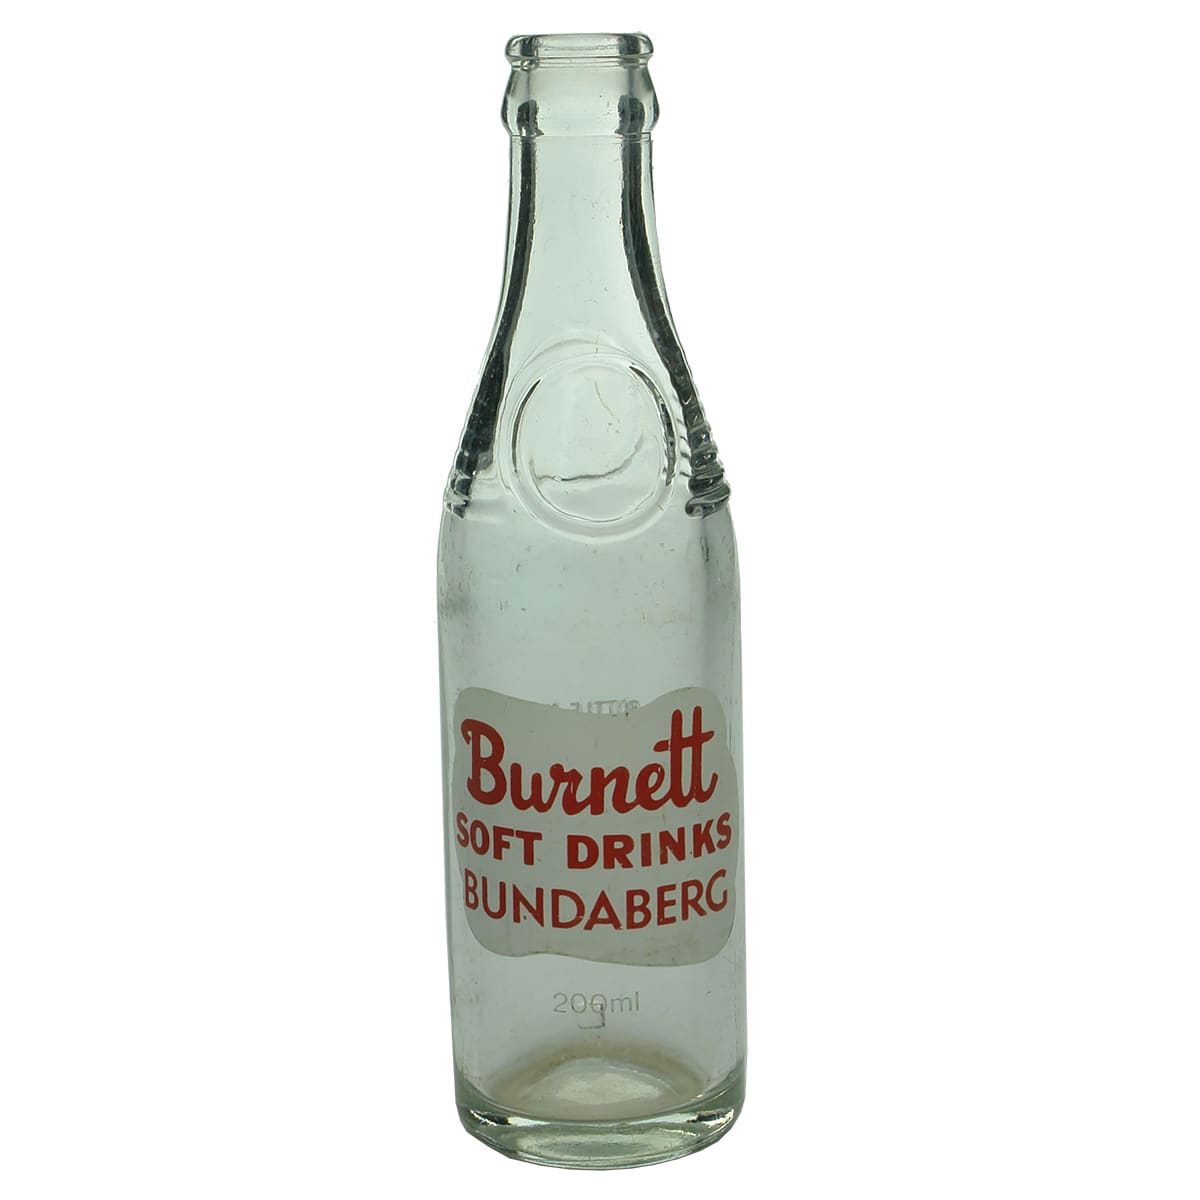 Crown Seal. Burnett Soft Drinks, Bundaberg. Red and white print. 200 ml. (Queensland)